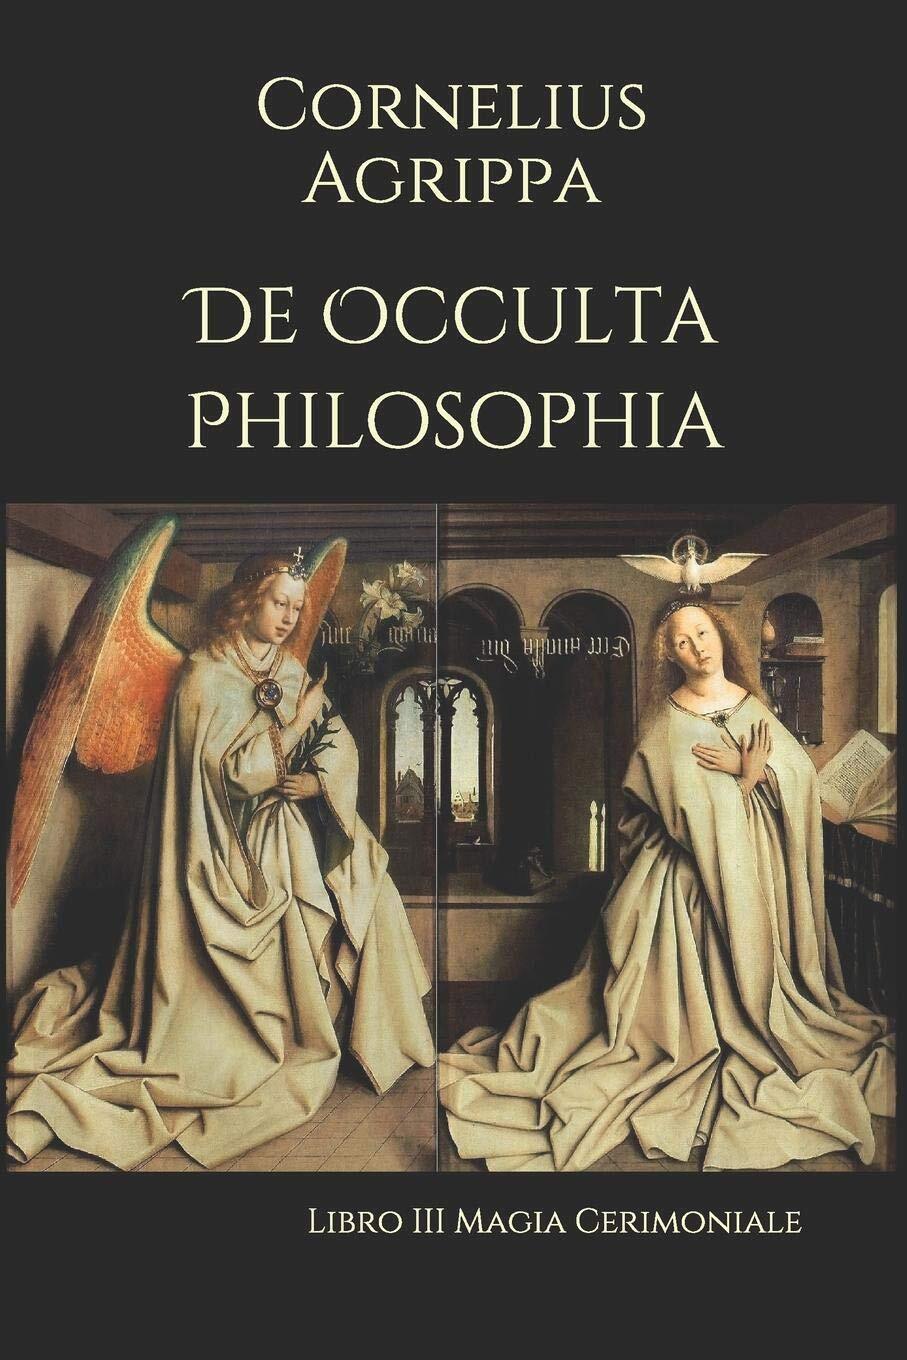 De Occulta Philosophia: Libro III Magia Cerimoniale - Cornelius Agrippa - 2019 libro usato